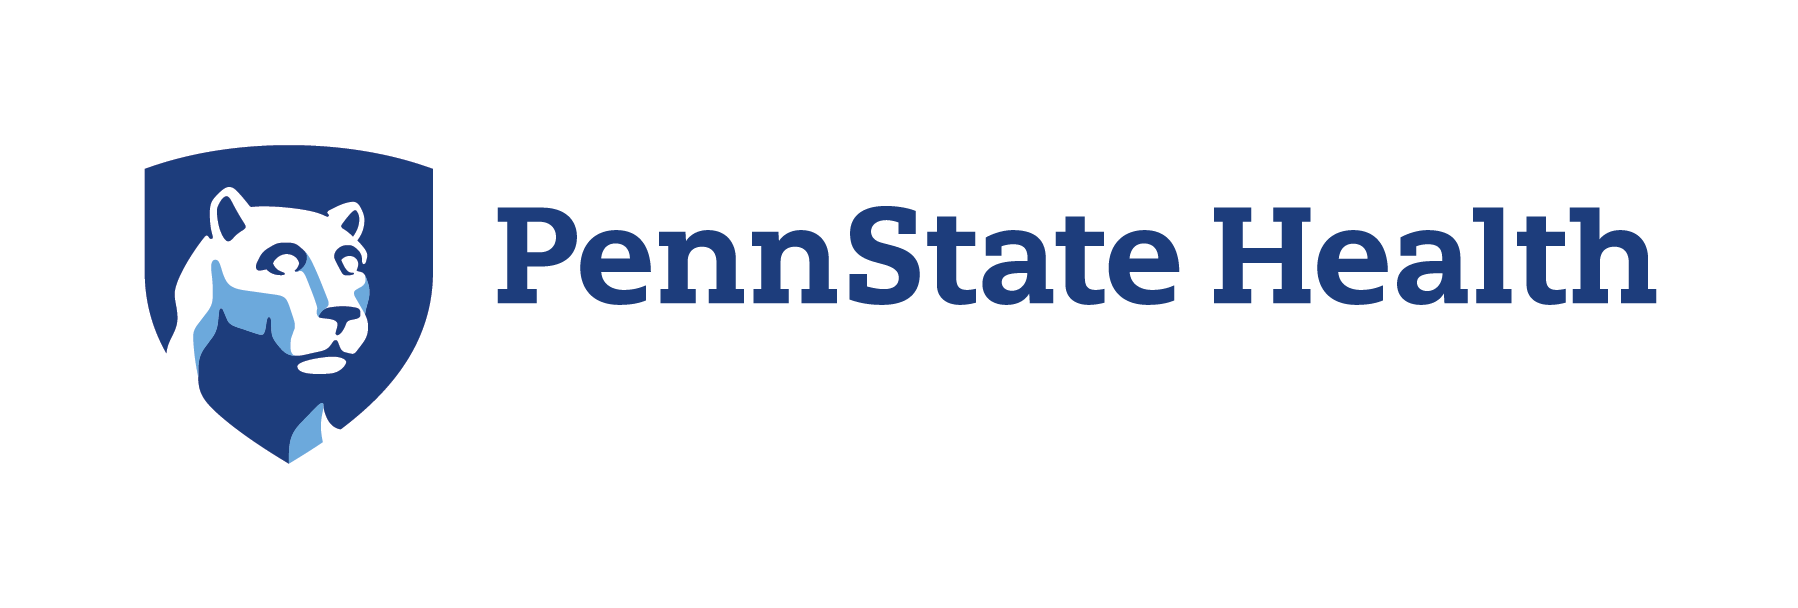 Penn State Health (Platinum)